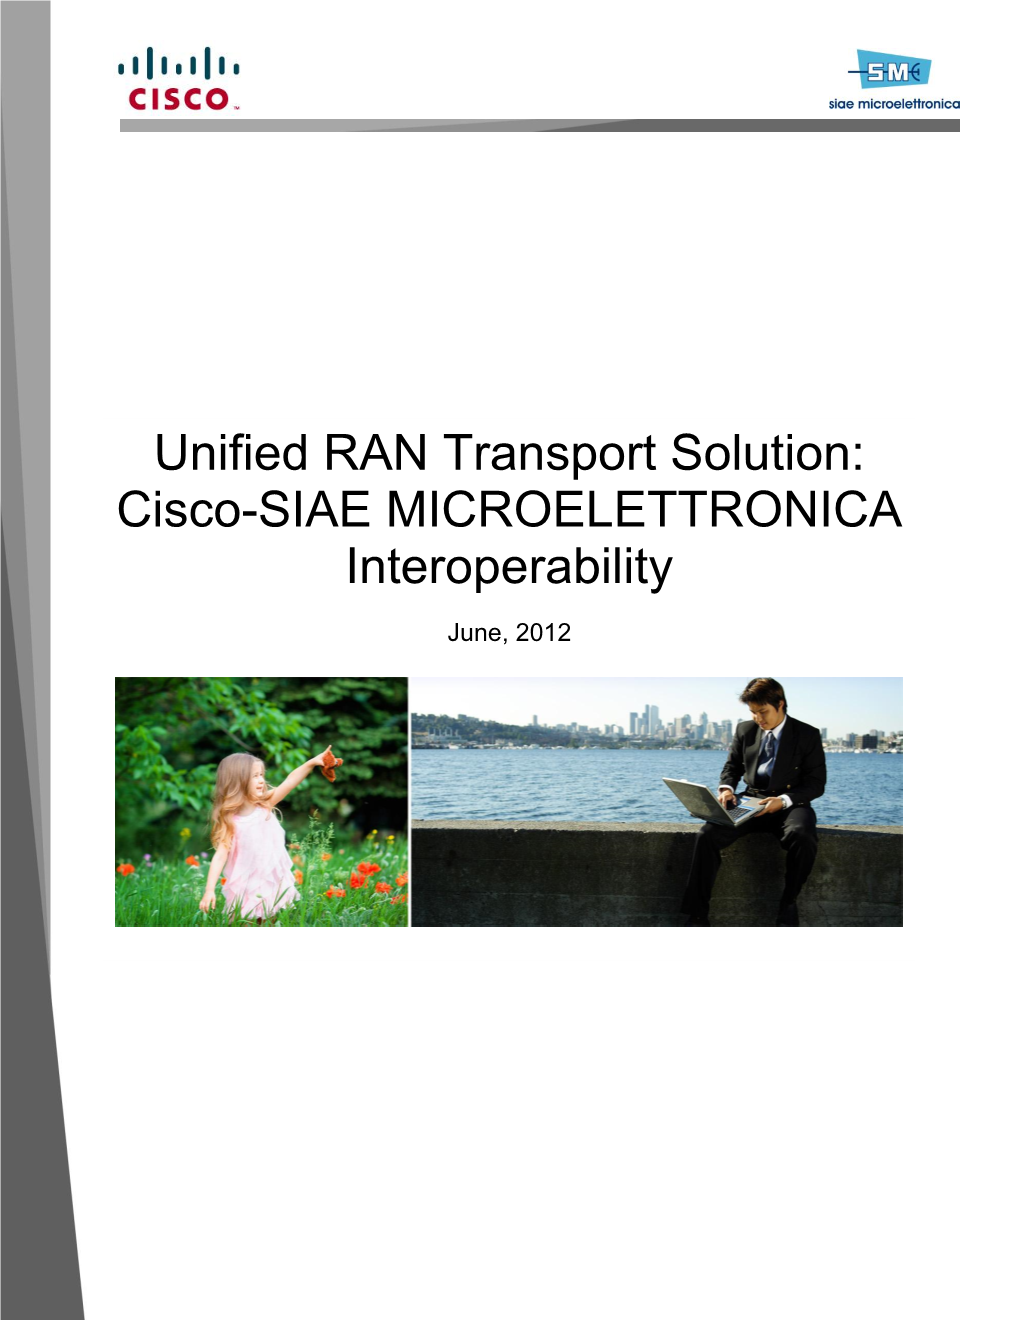 Unified RAN Transport Solution: Cisco-SIAE MICROELETTRONICA Interoperability